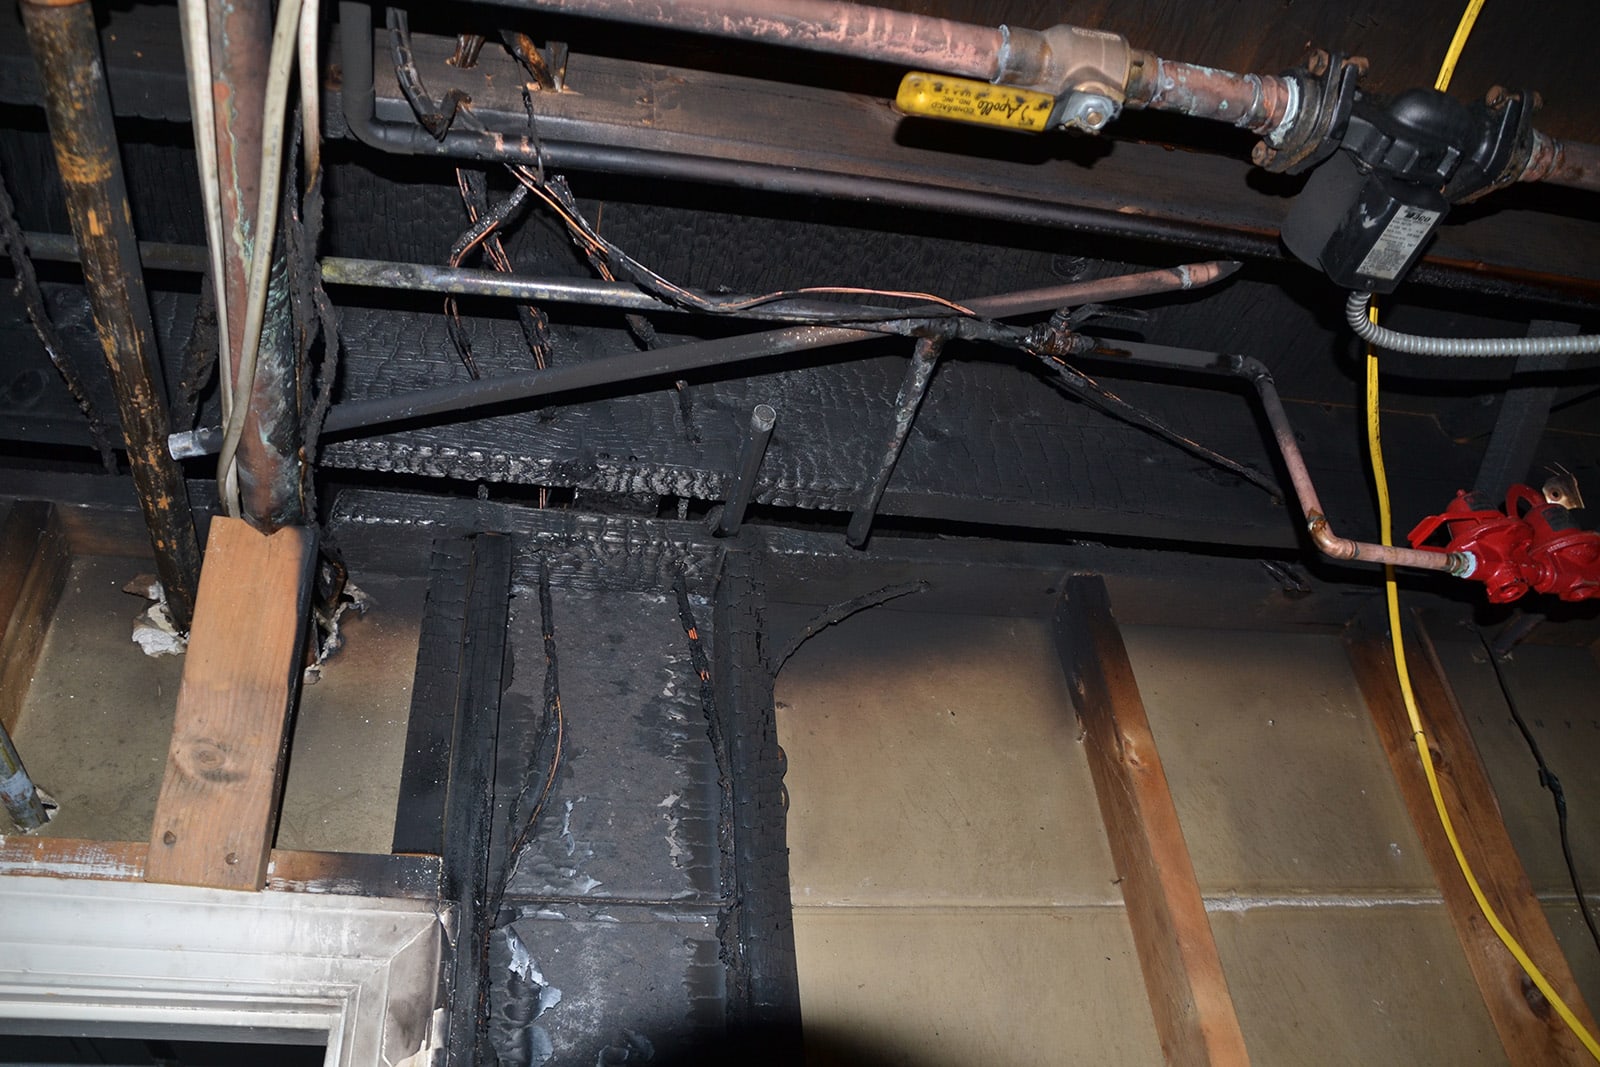 Hot Water Heater Leak? Here's What To Do - KPM Restoration